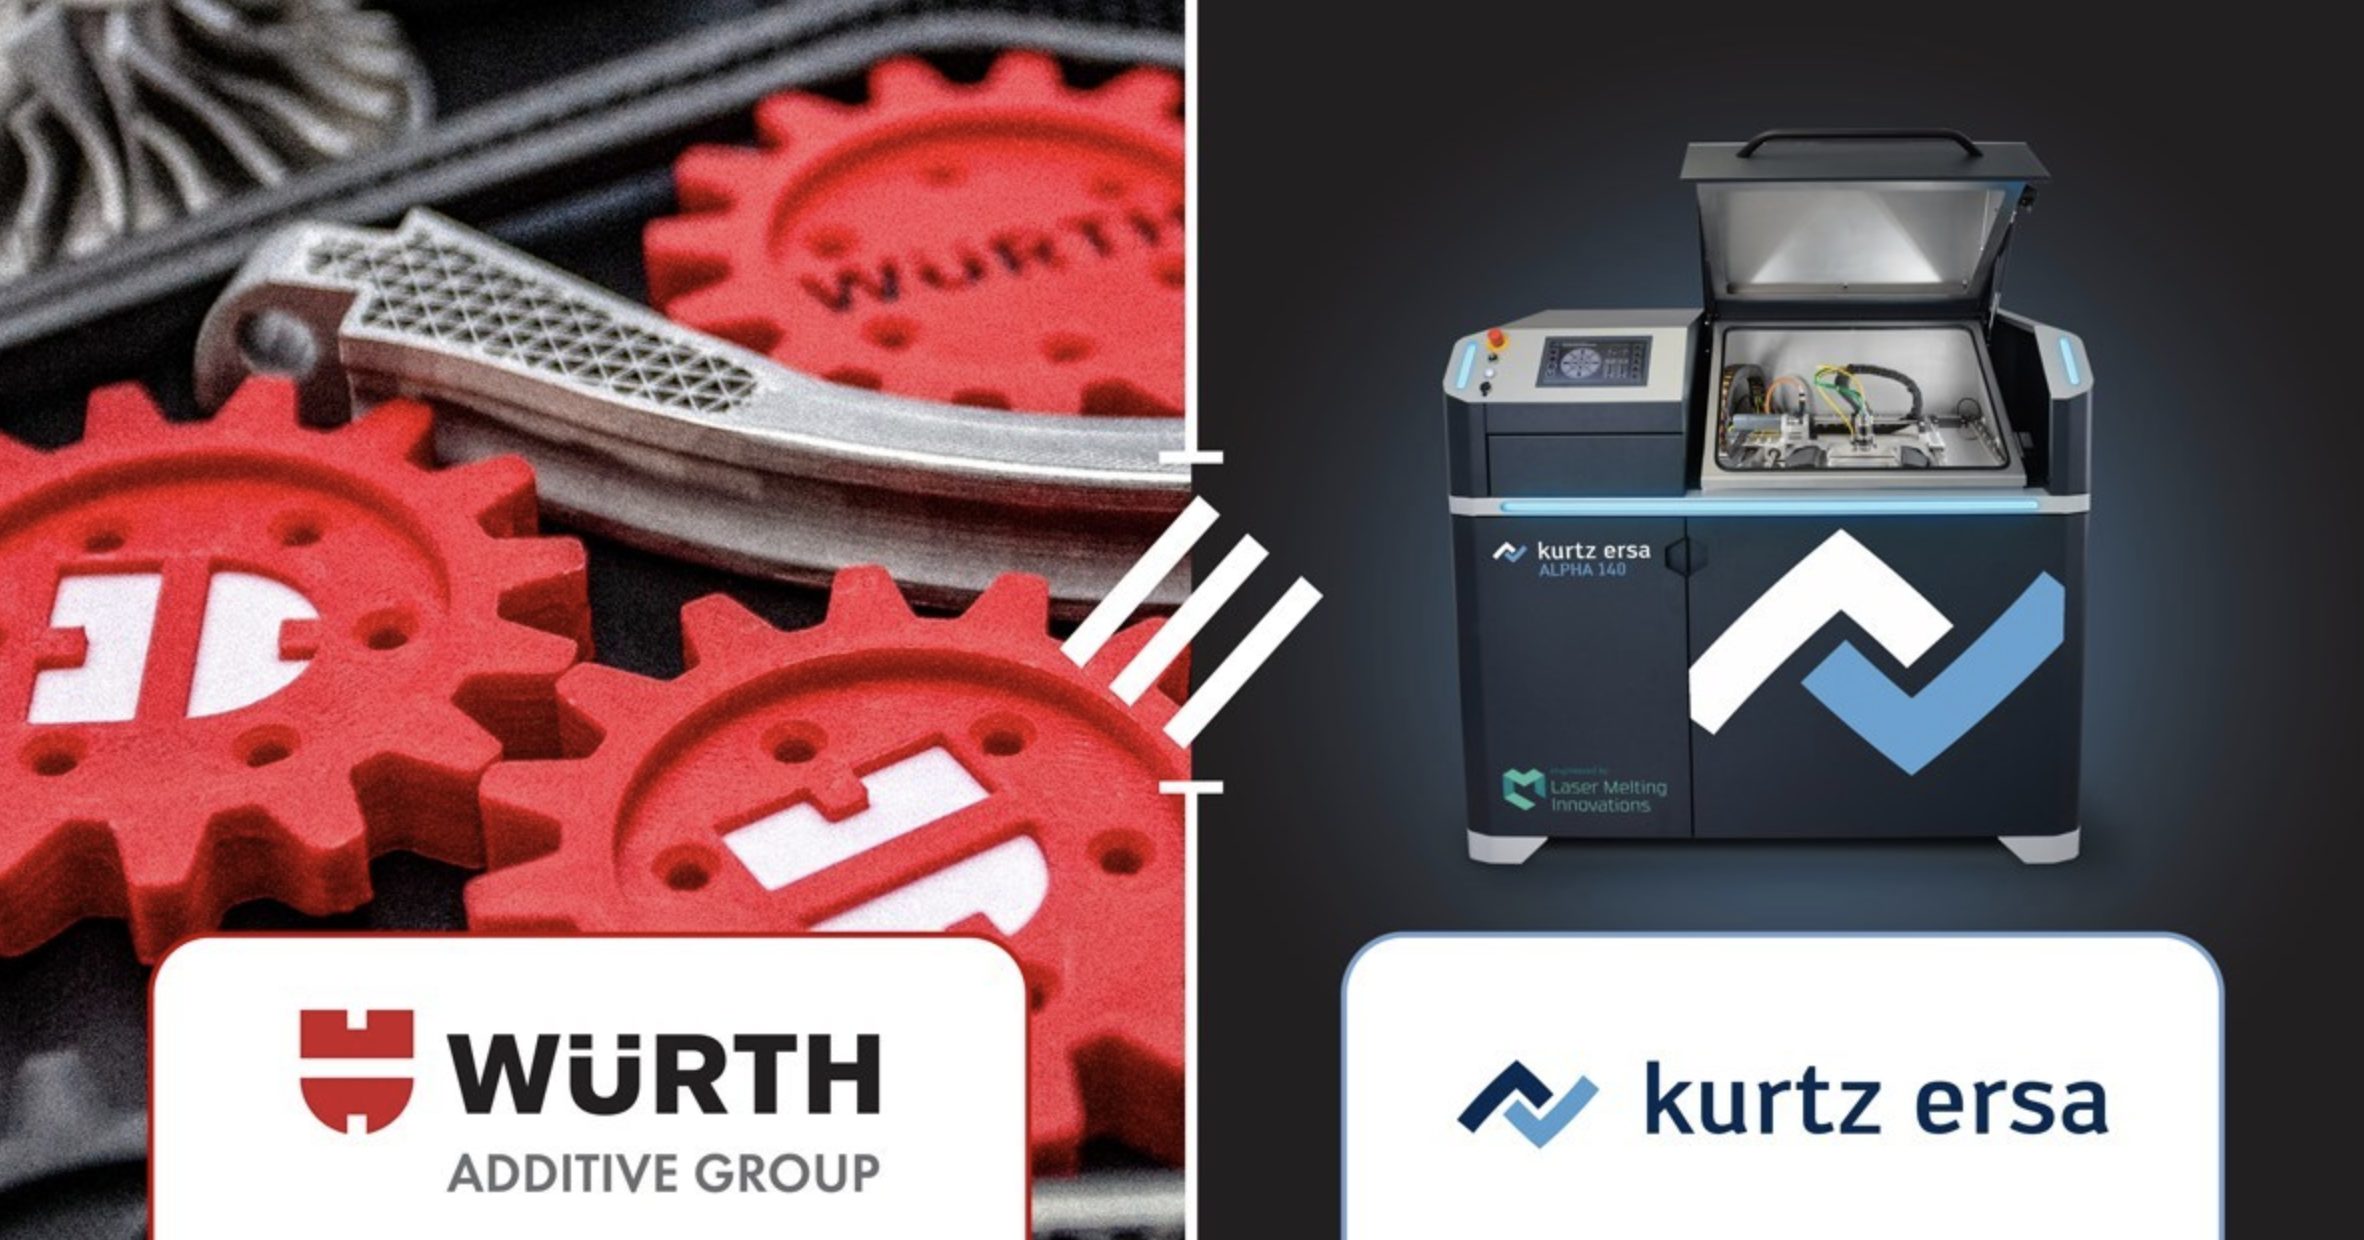 Würth Additive Group now distributes 3D printing technology from Kurtz Ersa